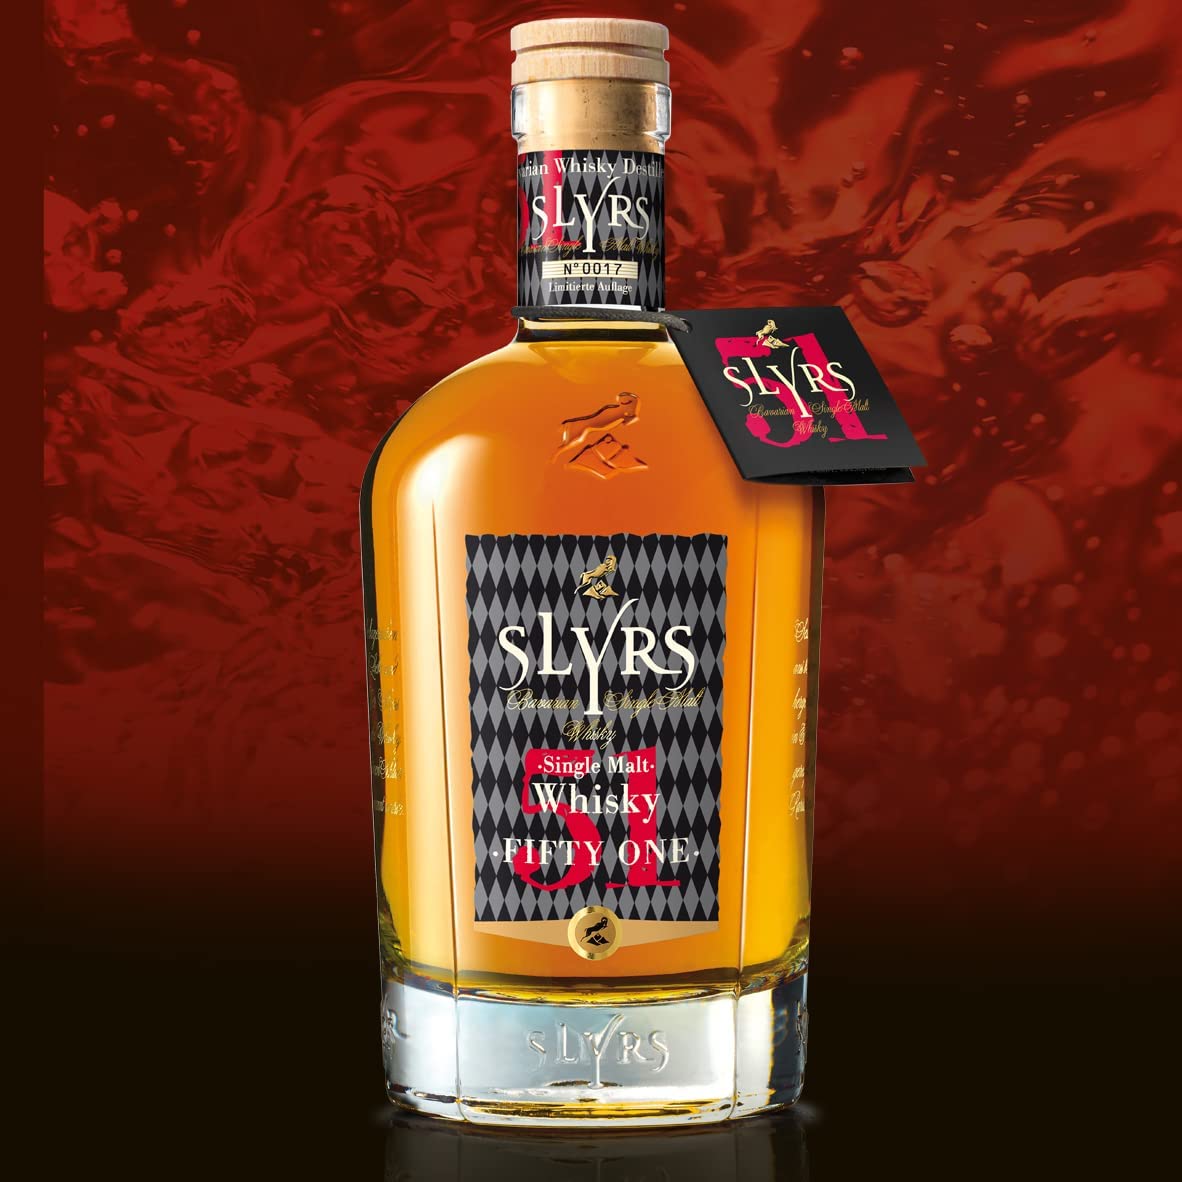 Slyrs Bavarian Single Malt vol. Life – 51% My Whisky – Whisky Fifty One